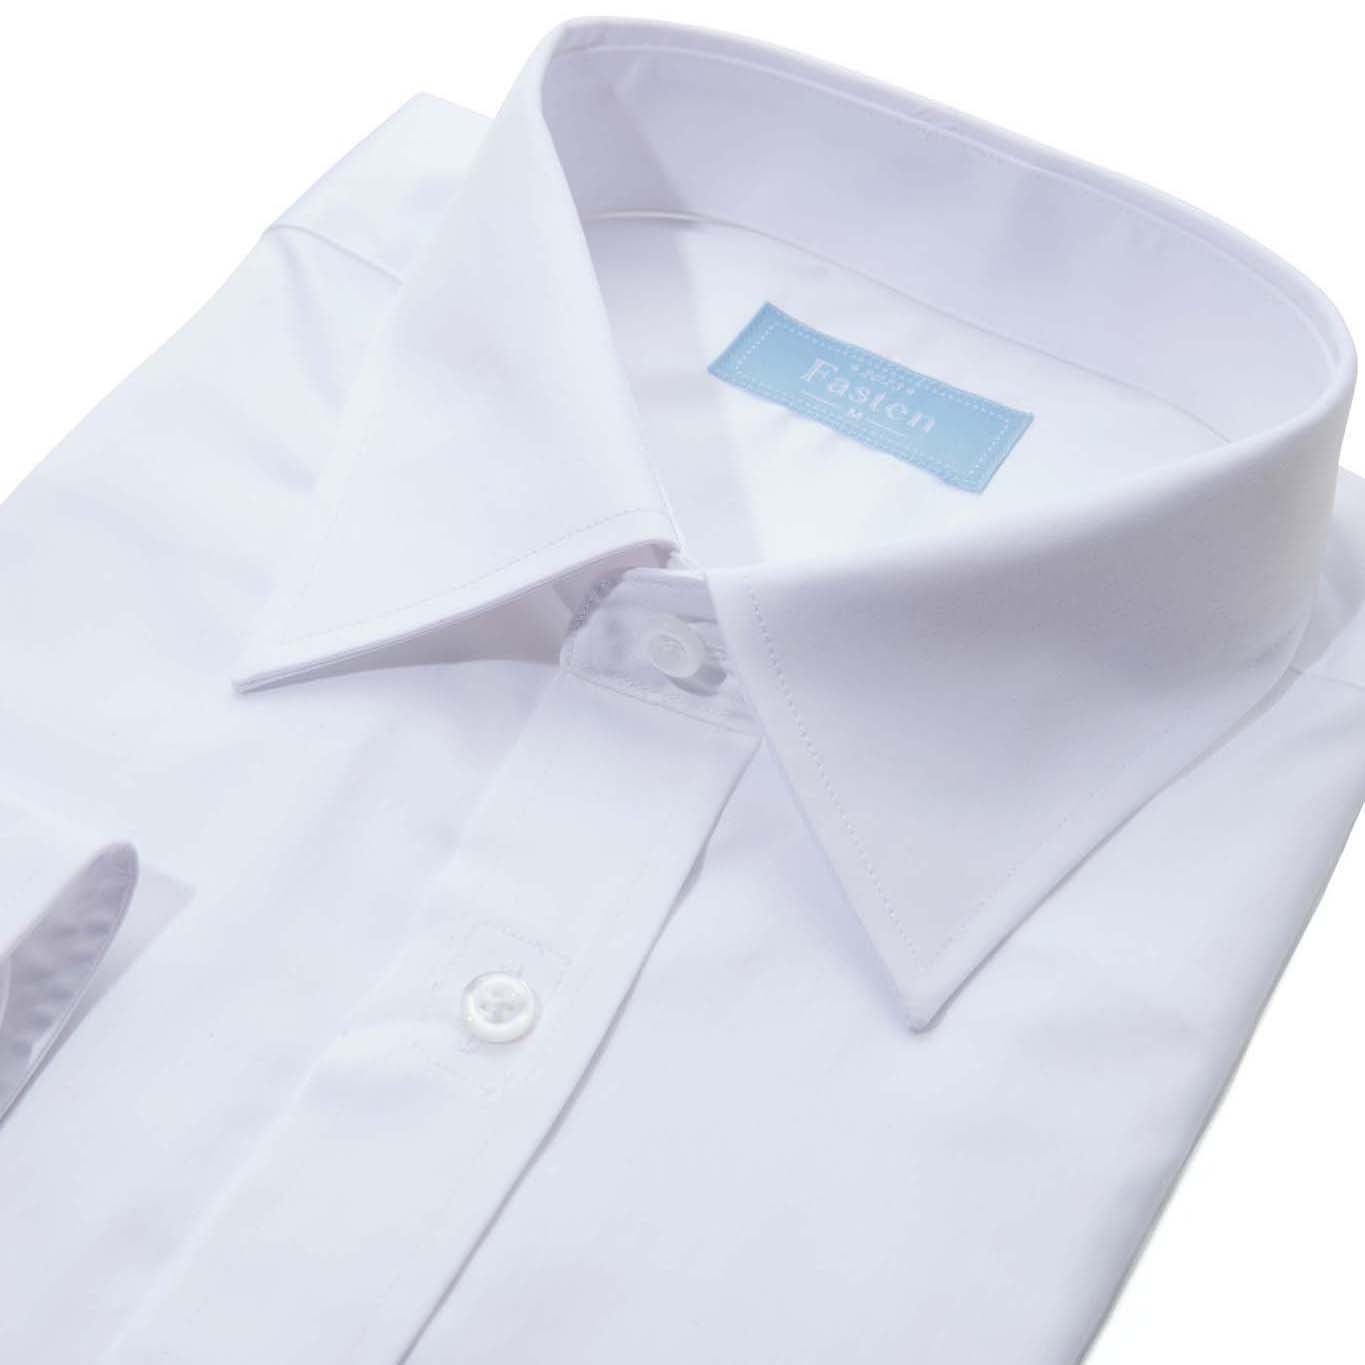 Men's adaptive dress shirt in white